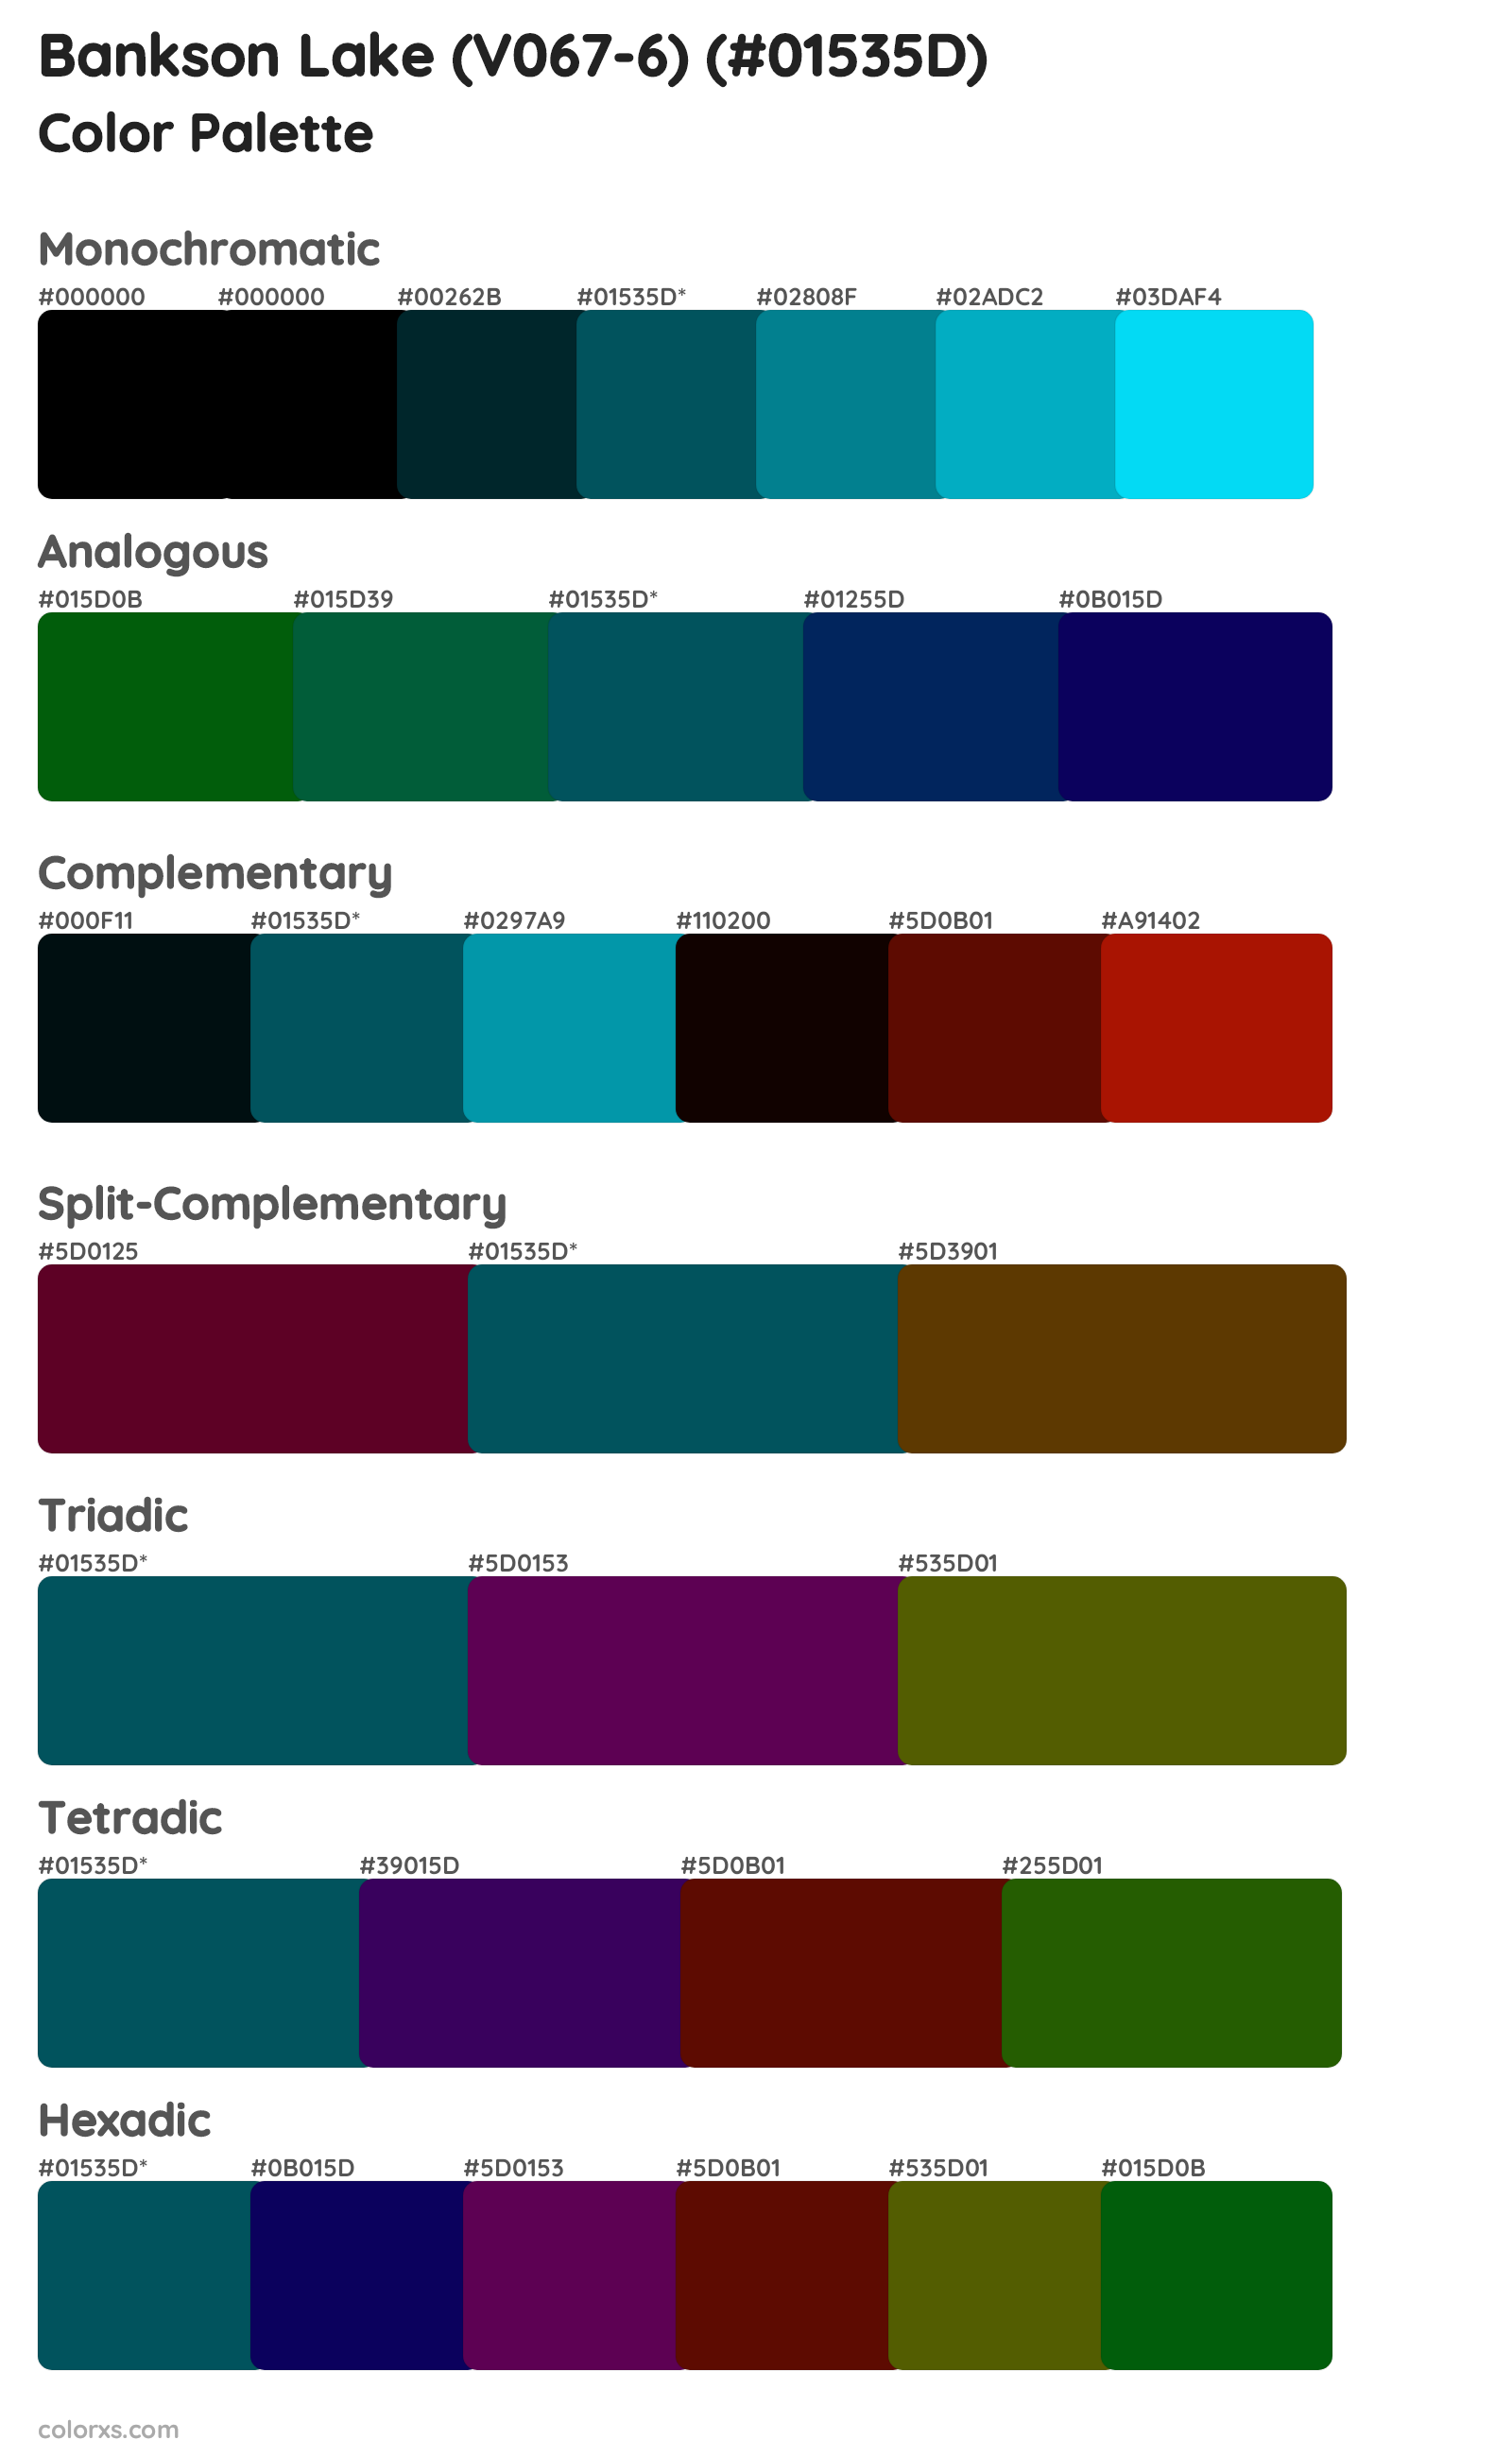 Bankson Lake (V067-6) Color Scheme Palettes